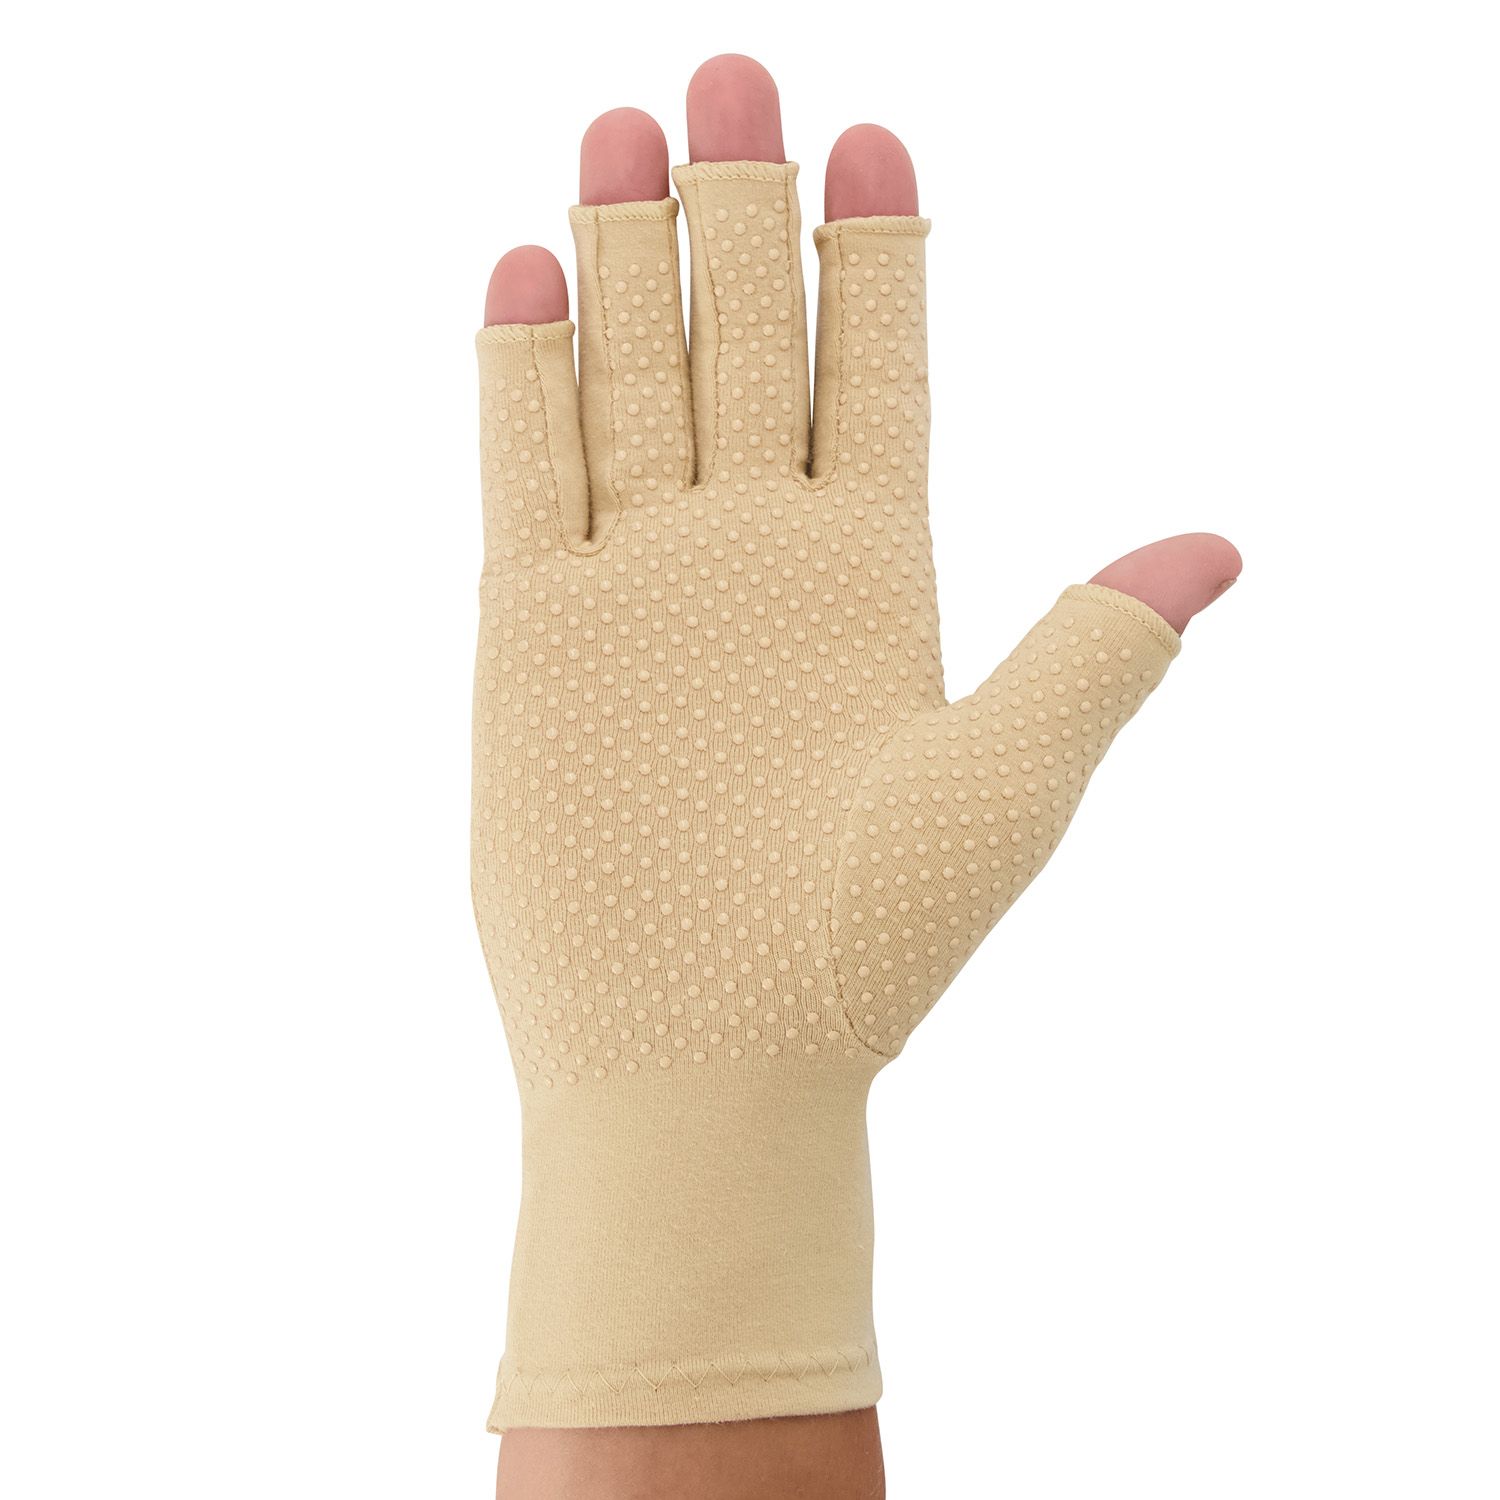 dunimed rheumatoid arthritis osteoarthritis gloves with anti-slip layer in skin zoomed in